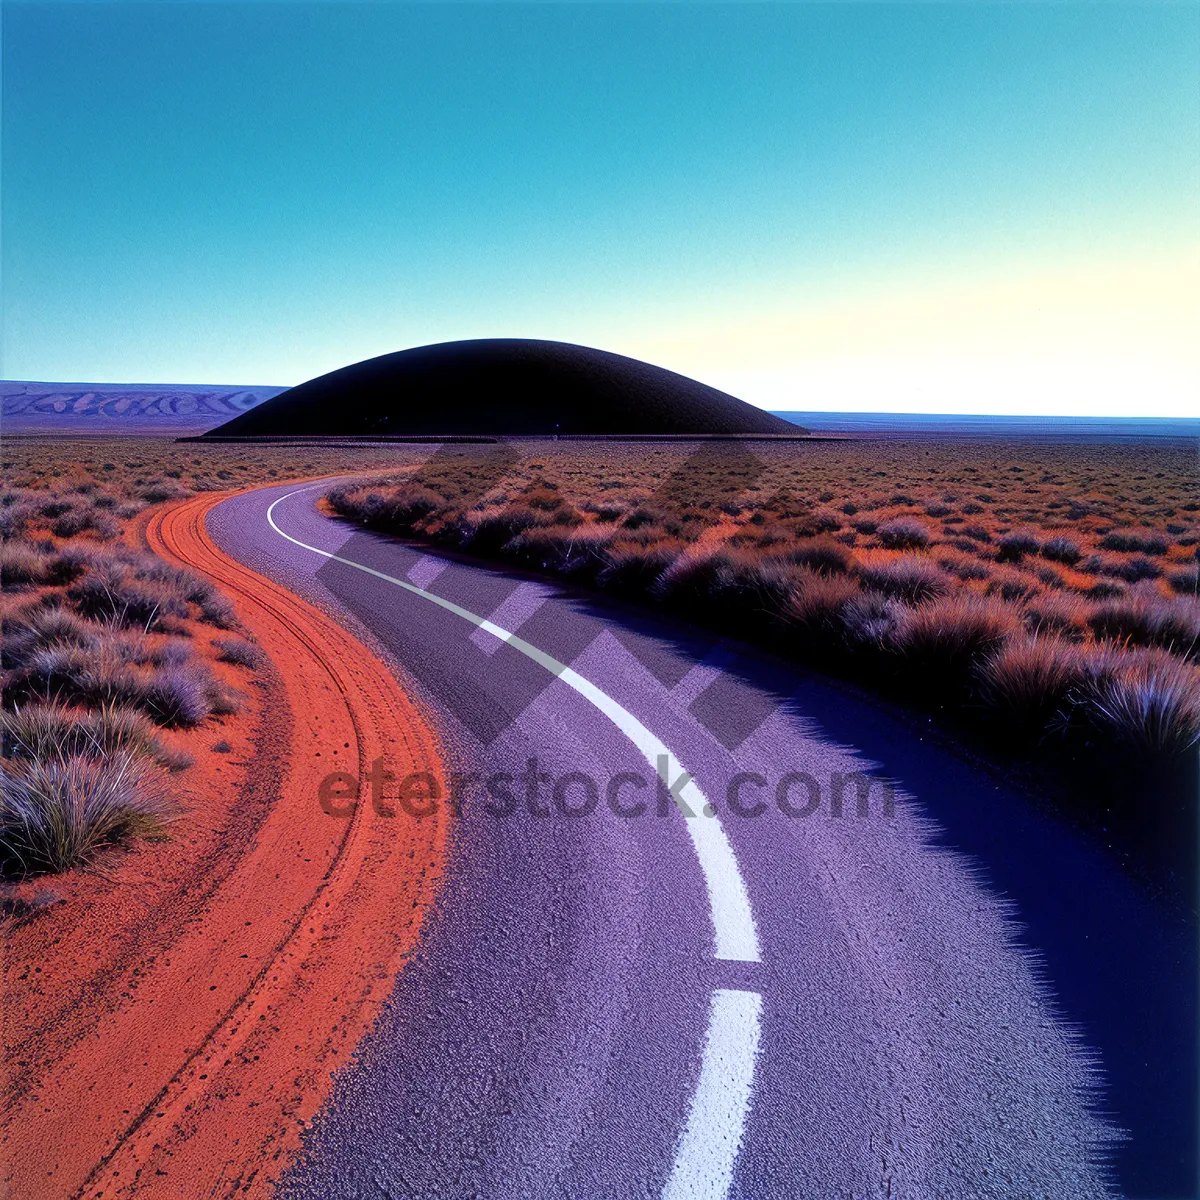 Picture of Sandy Road through Desert Landscape